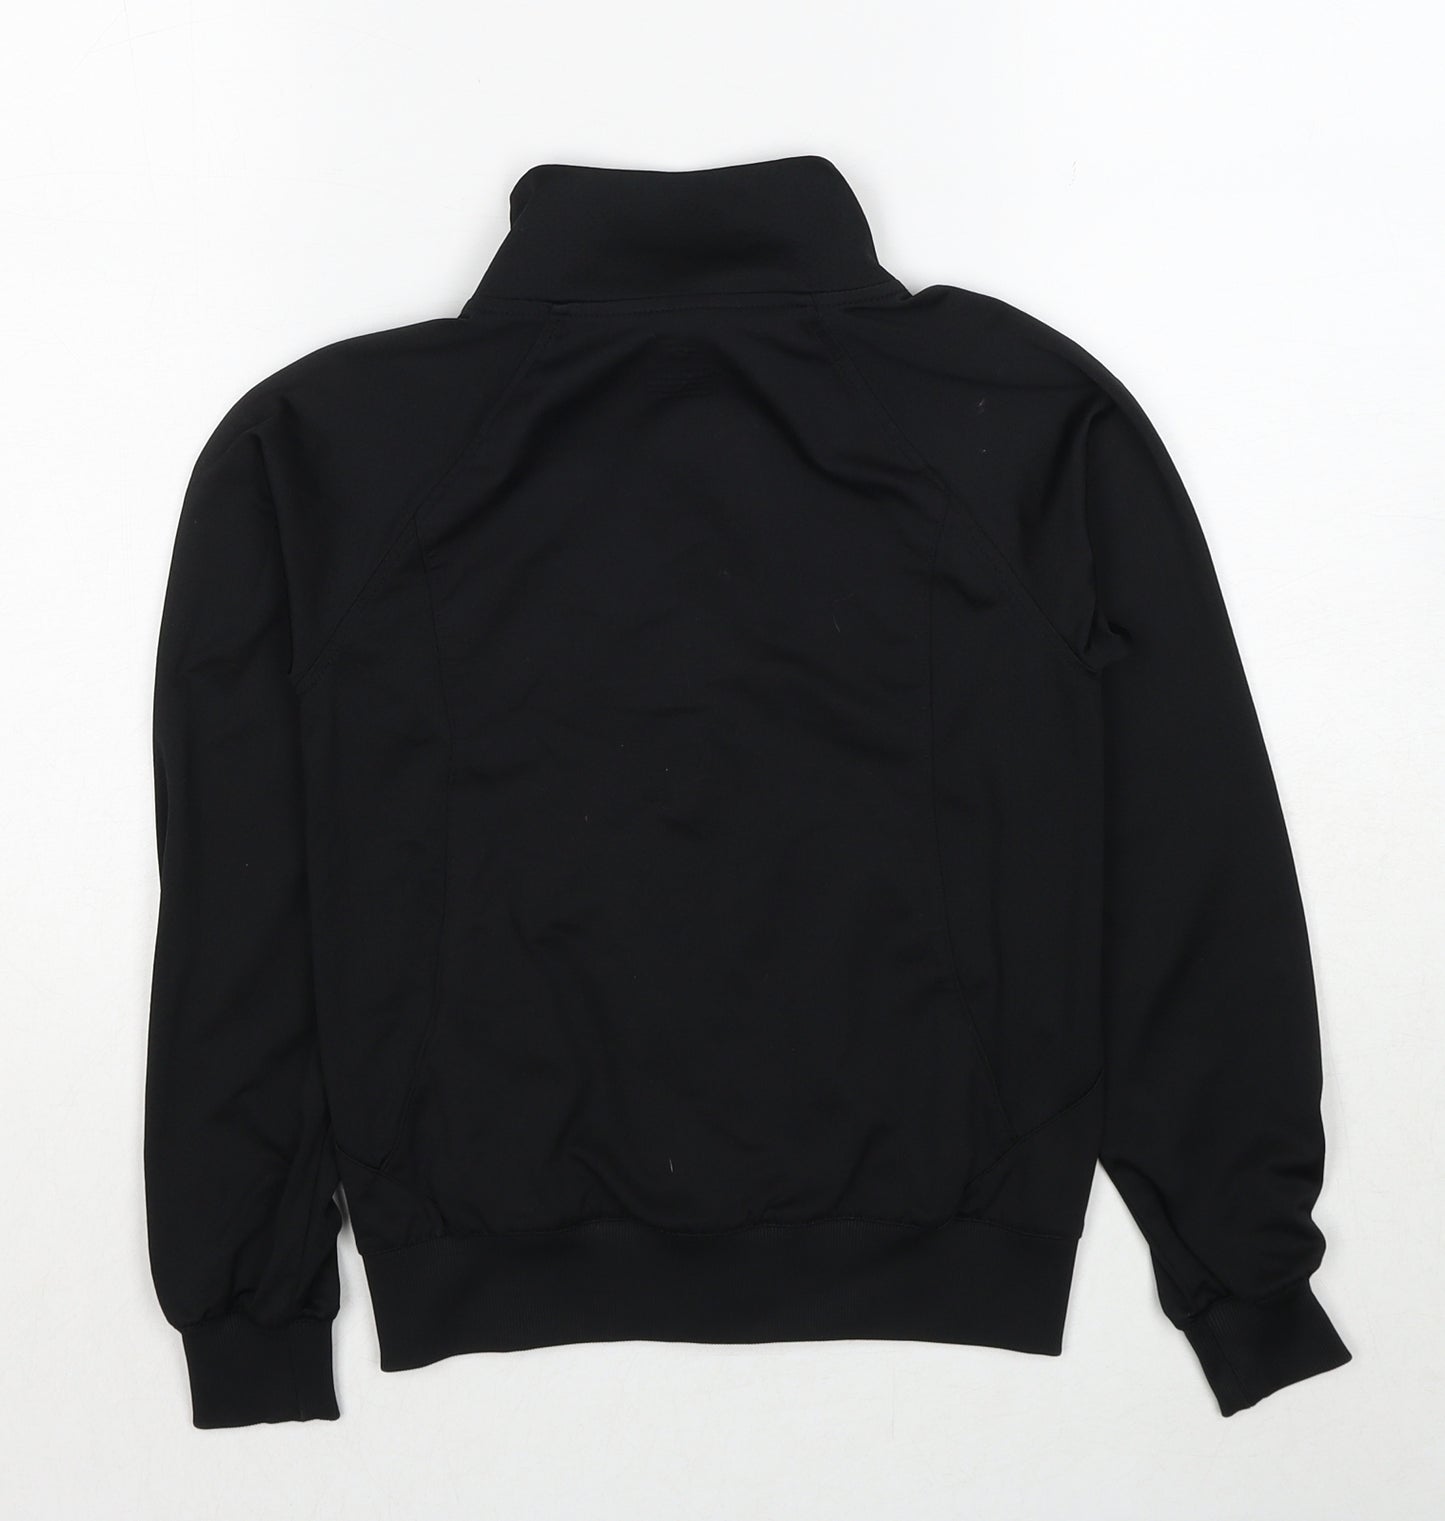 H&M Boys Black Polyester Full Zip Sweatshirt Size 8-9 Years - Age 8-10 Years